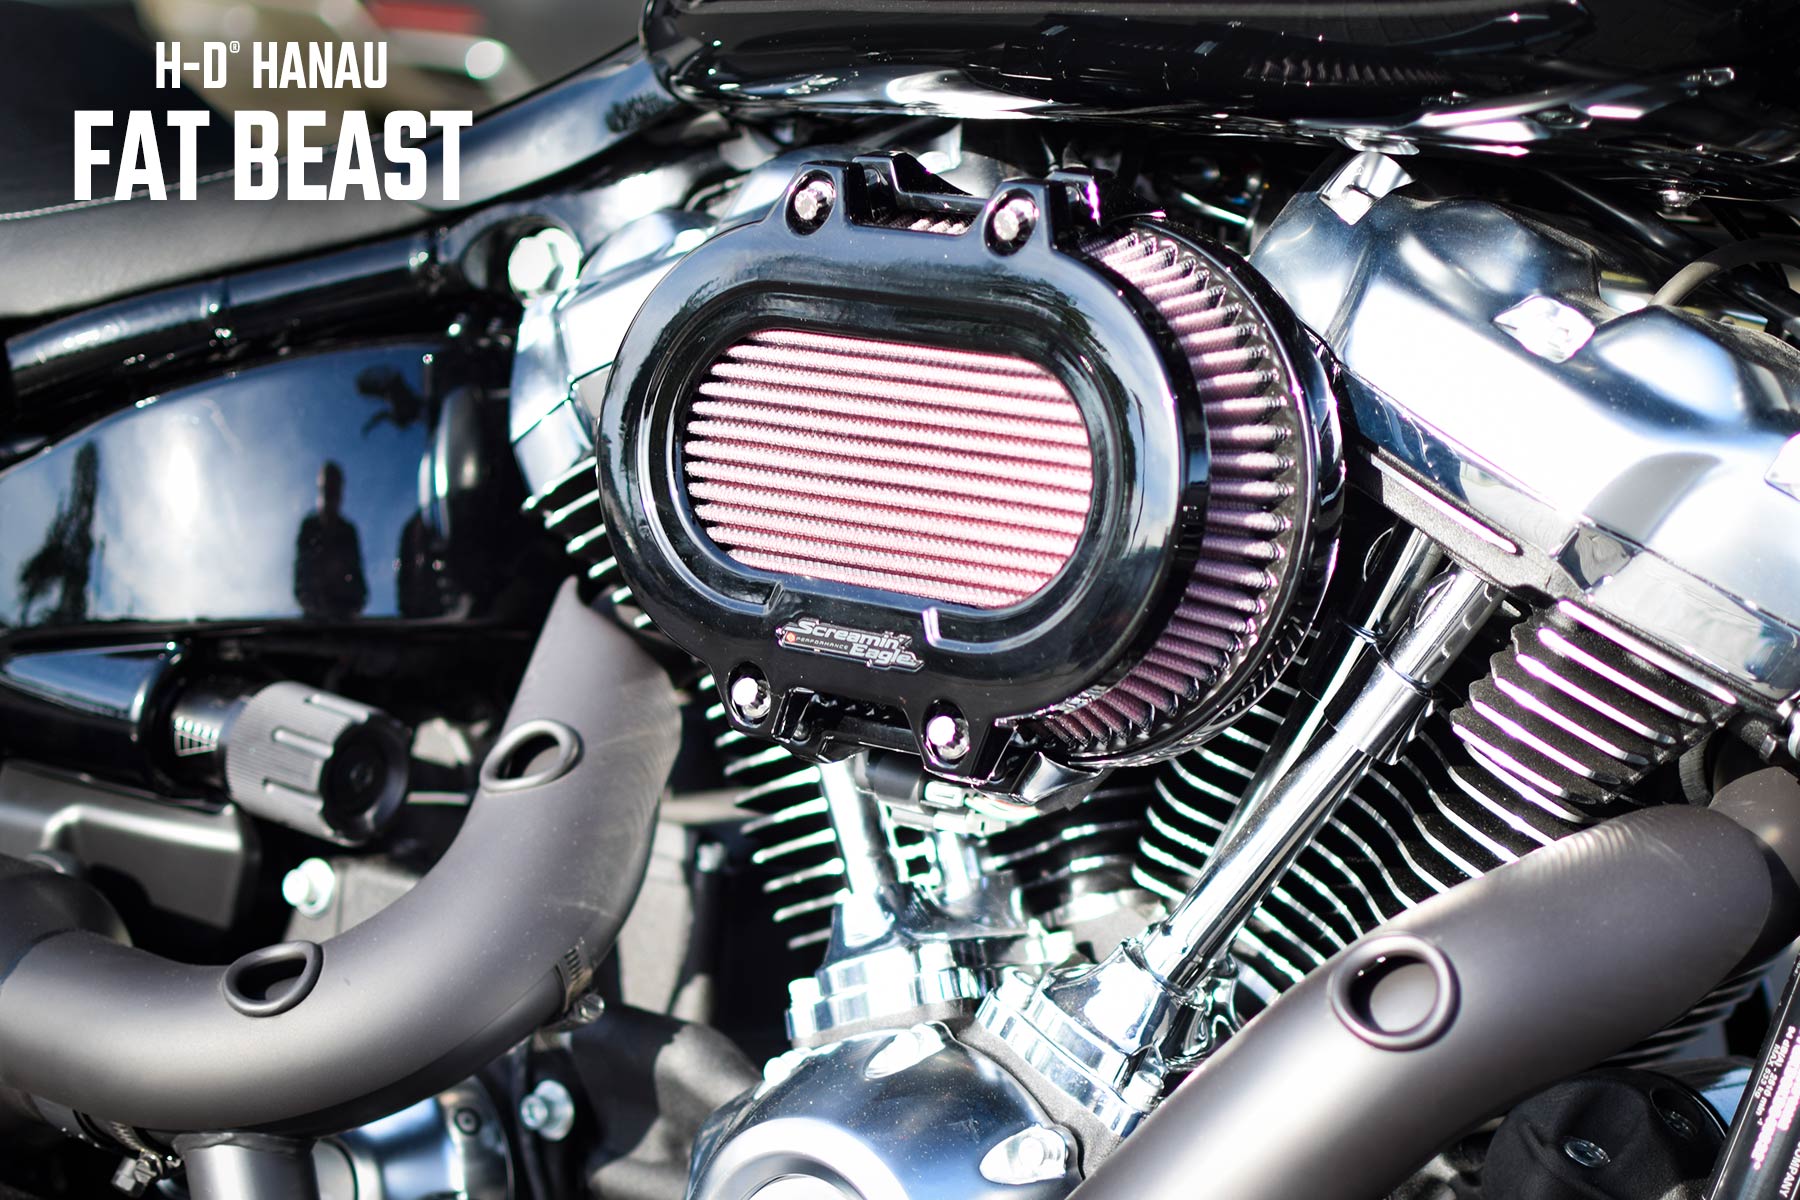 Harley-Davidson Hanau präsentiert Fat Beast Custombike - Umbau auf Fat Boy Basis